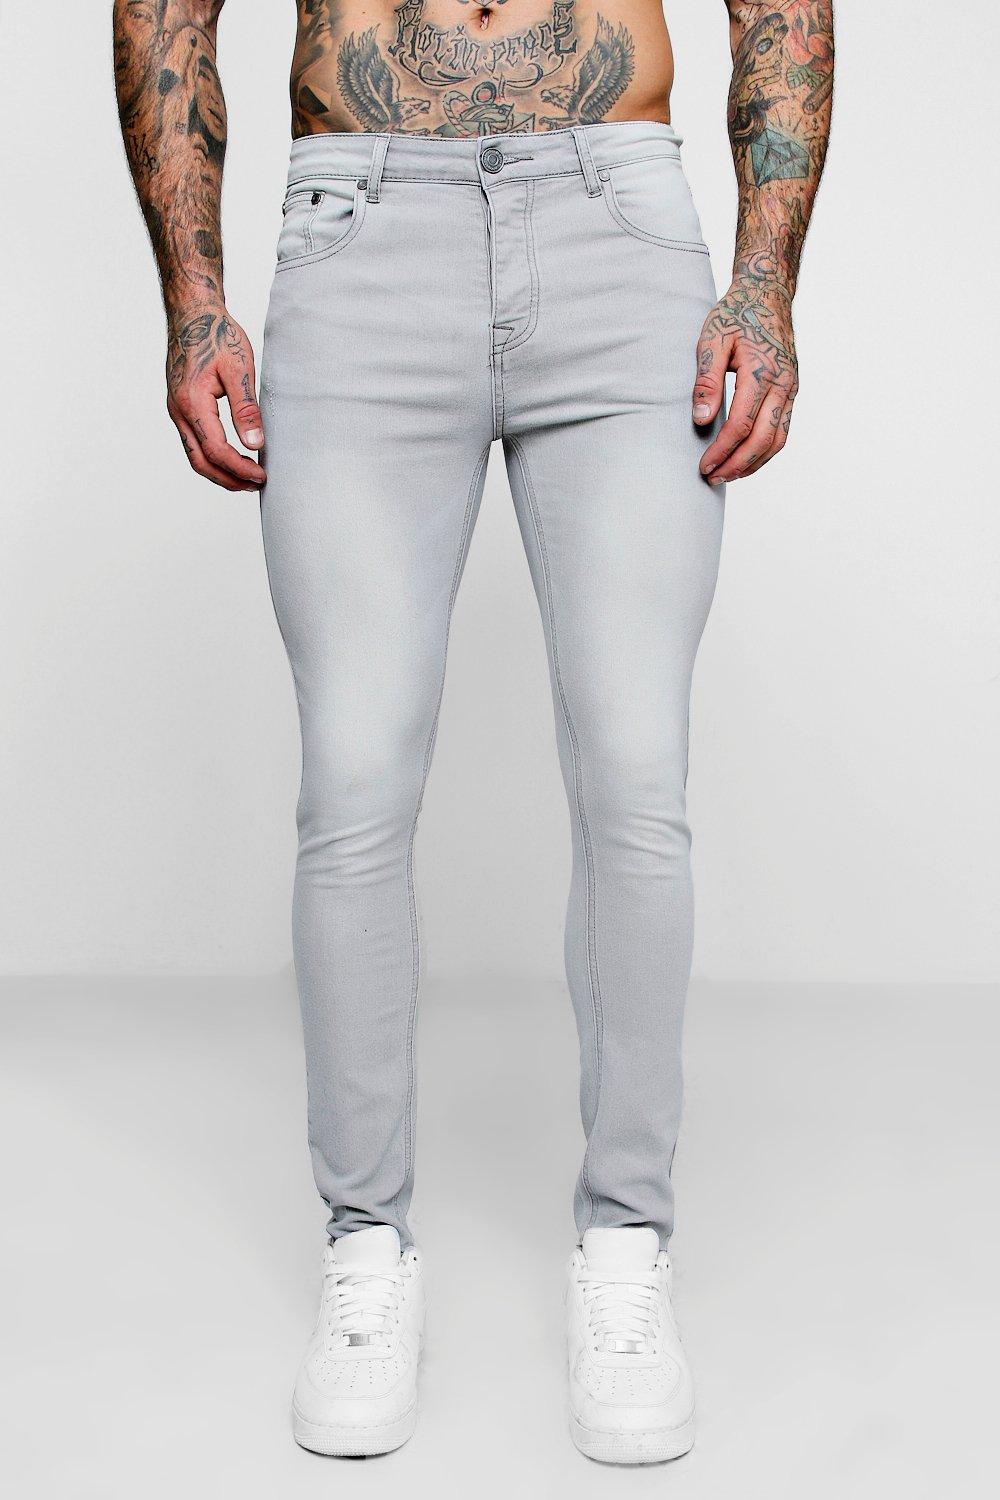 pale grey jeans